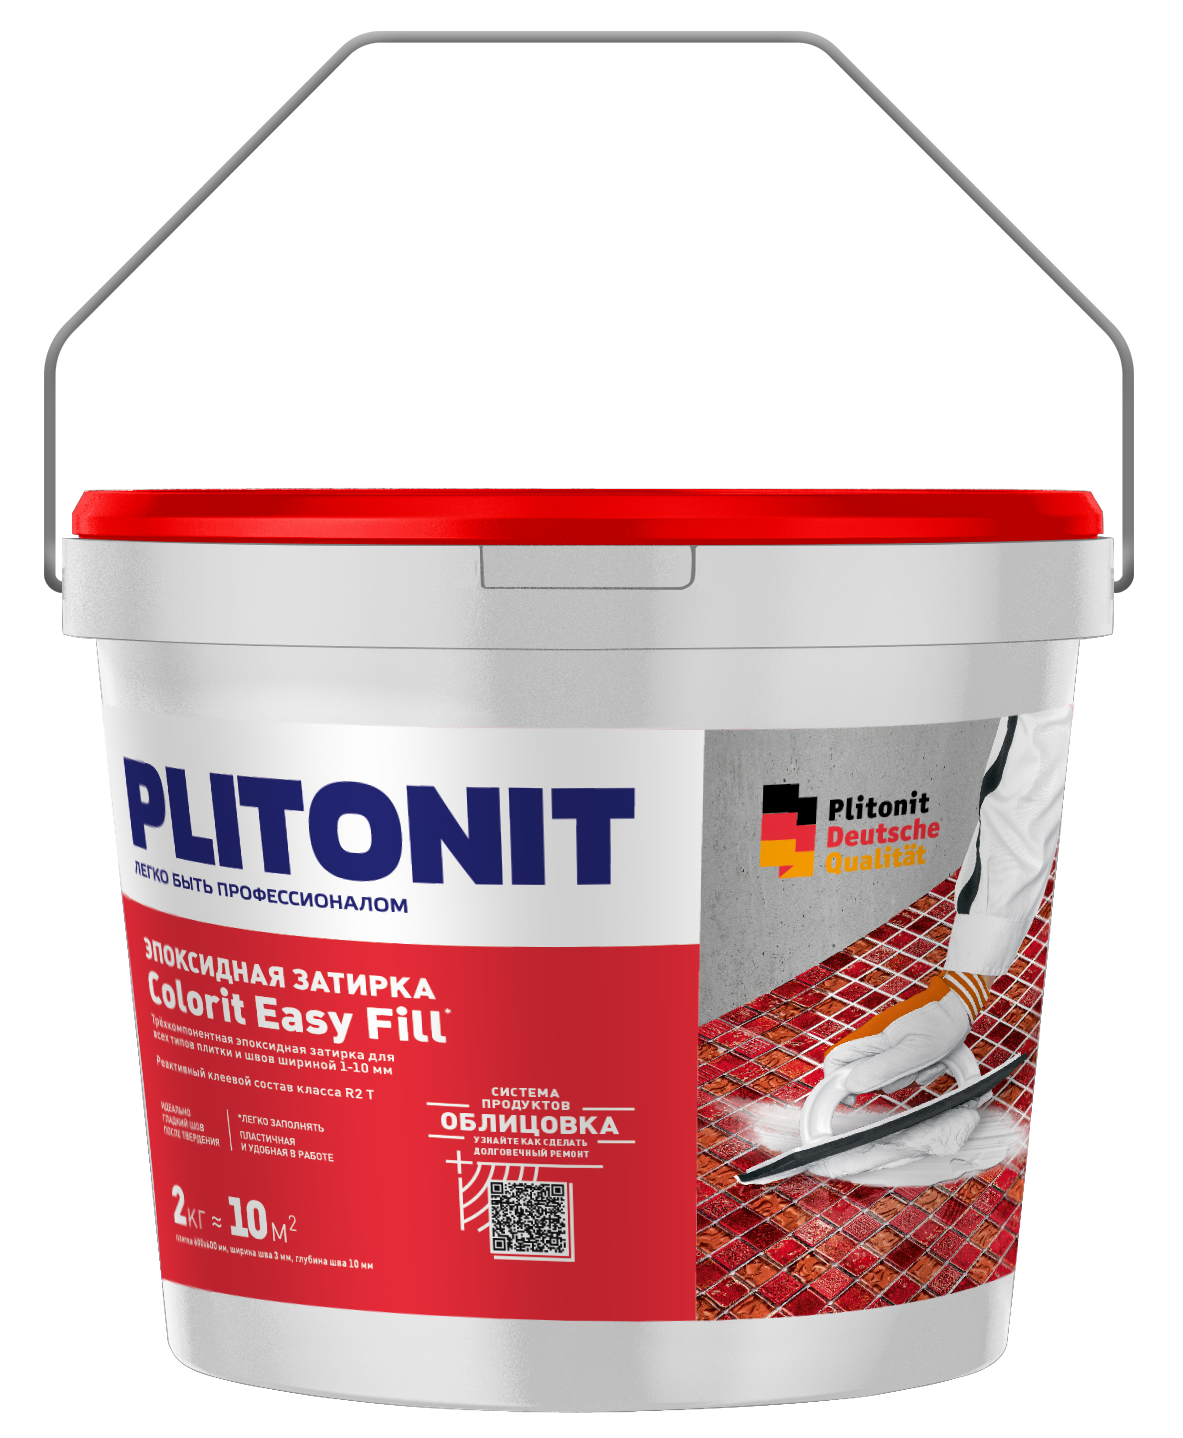 PLITONIT Colorit Easy Fill